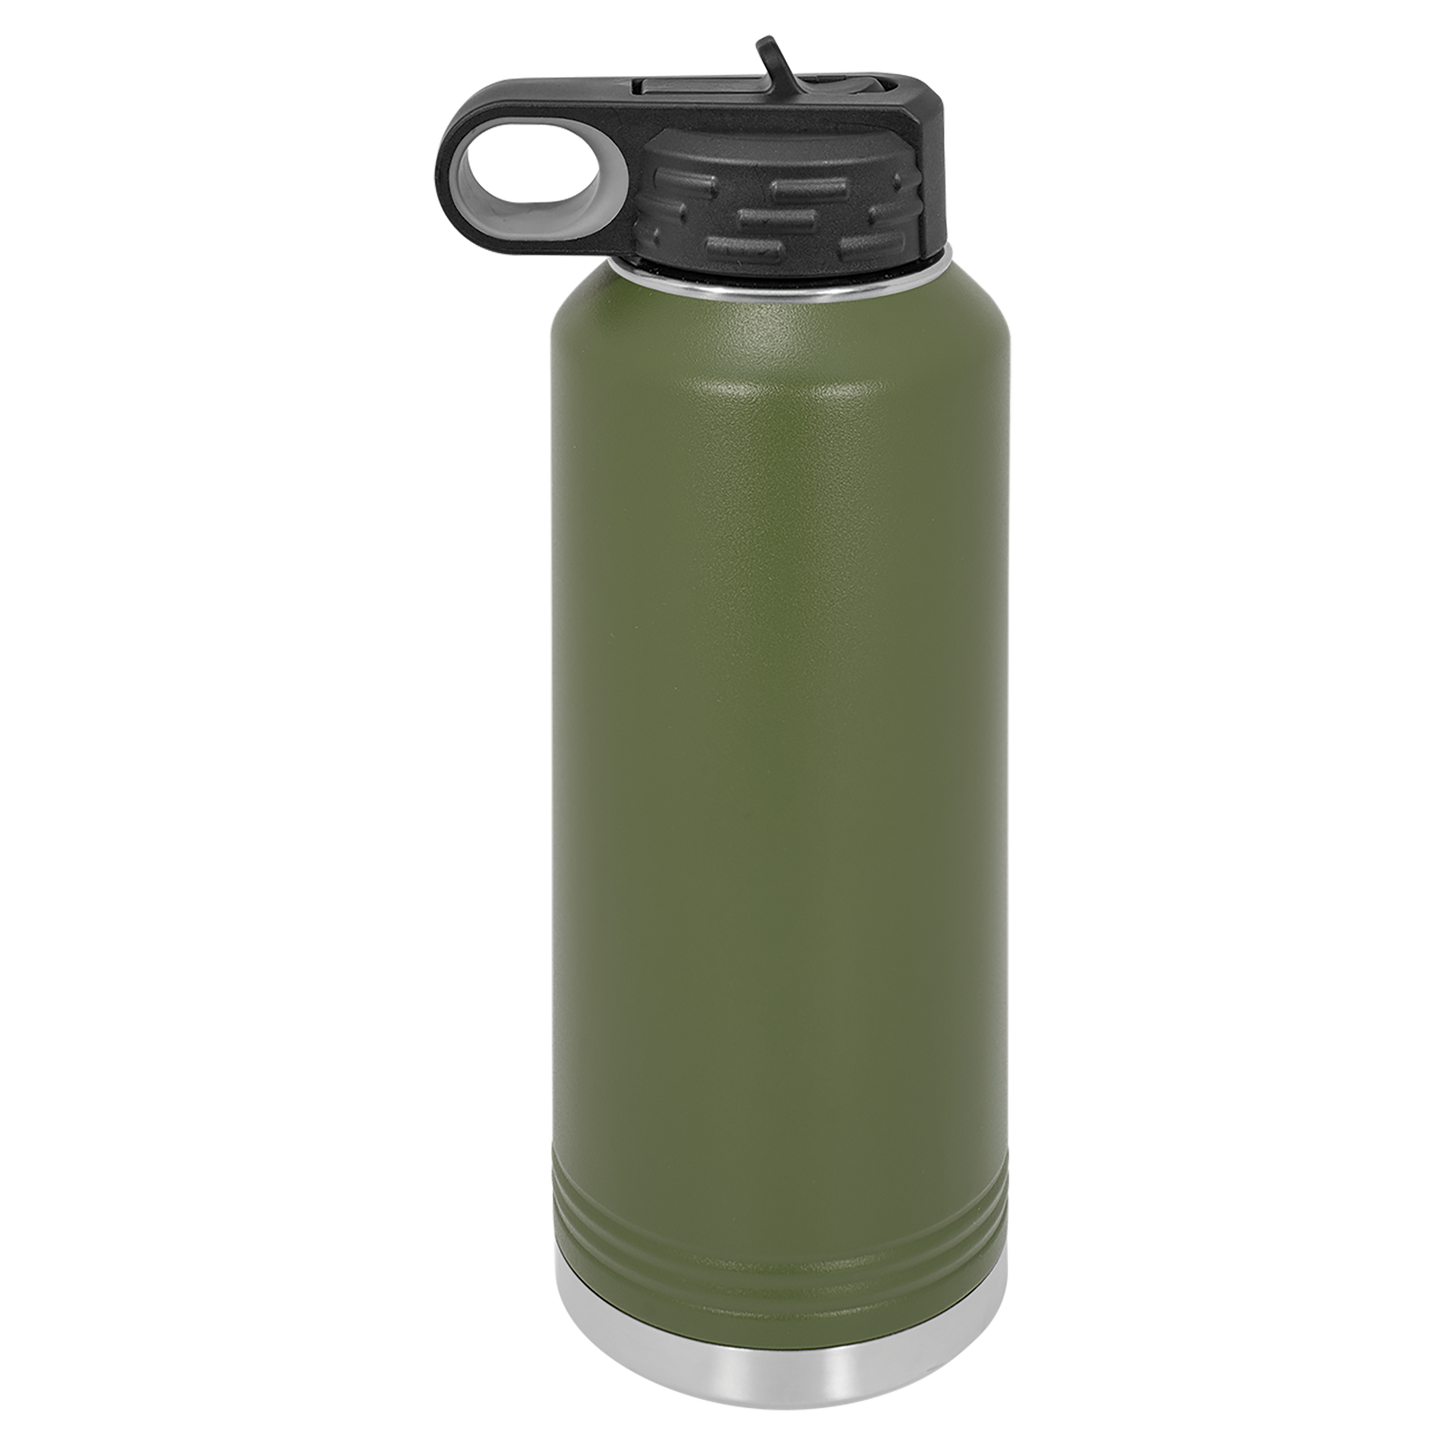 Cairn Terrier Water Bottle